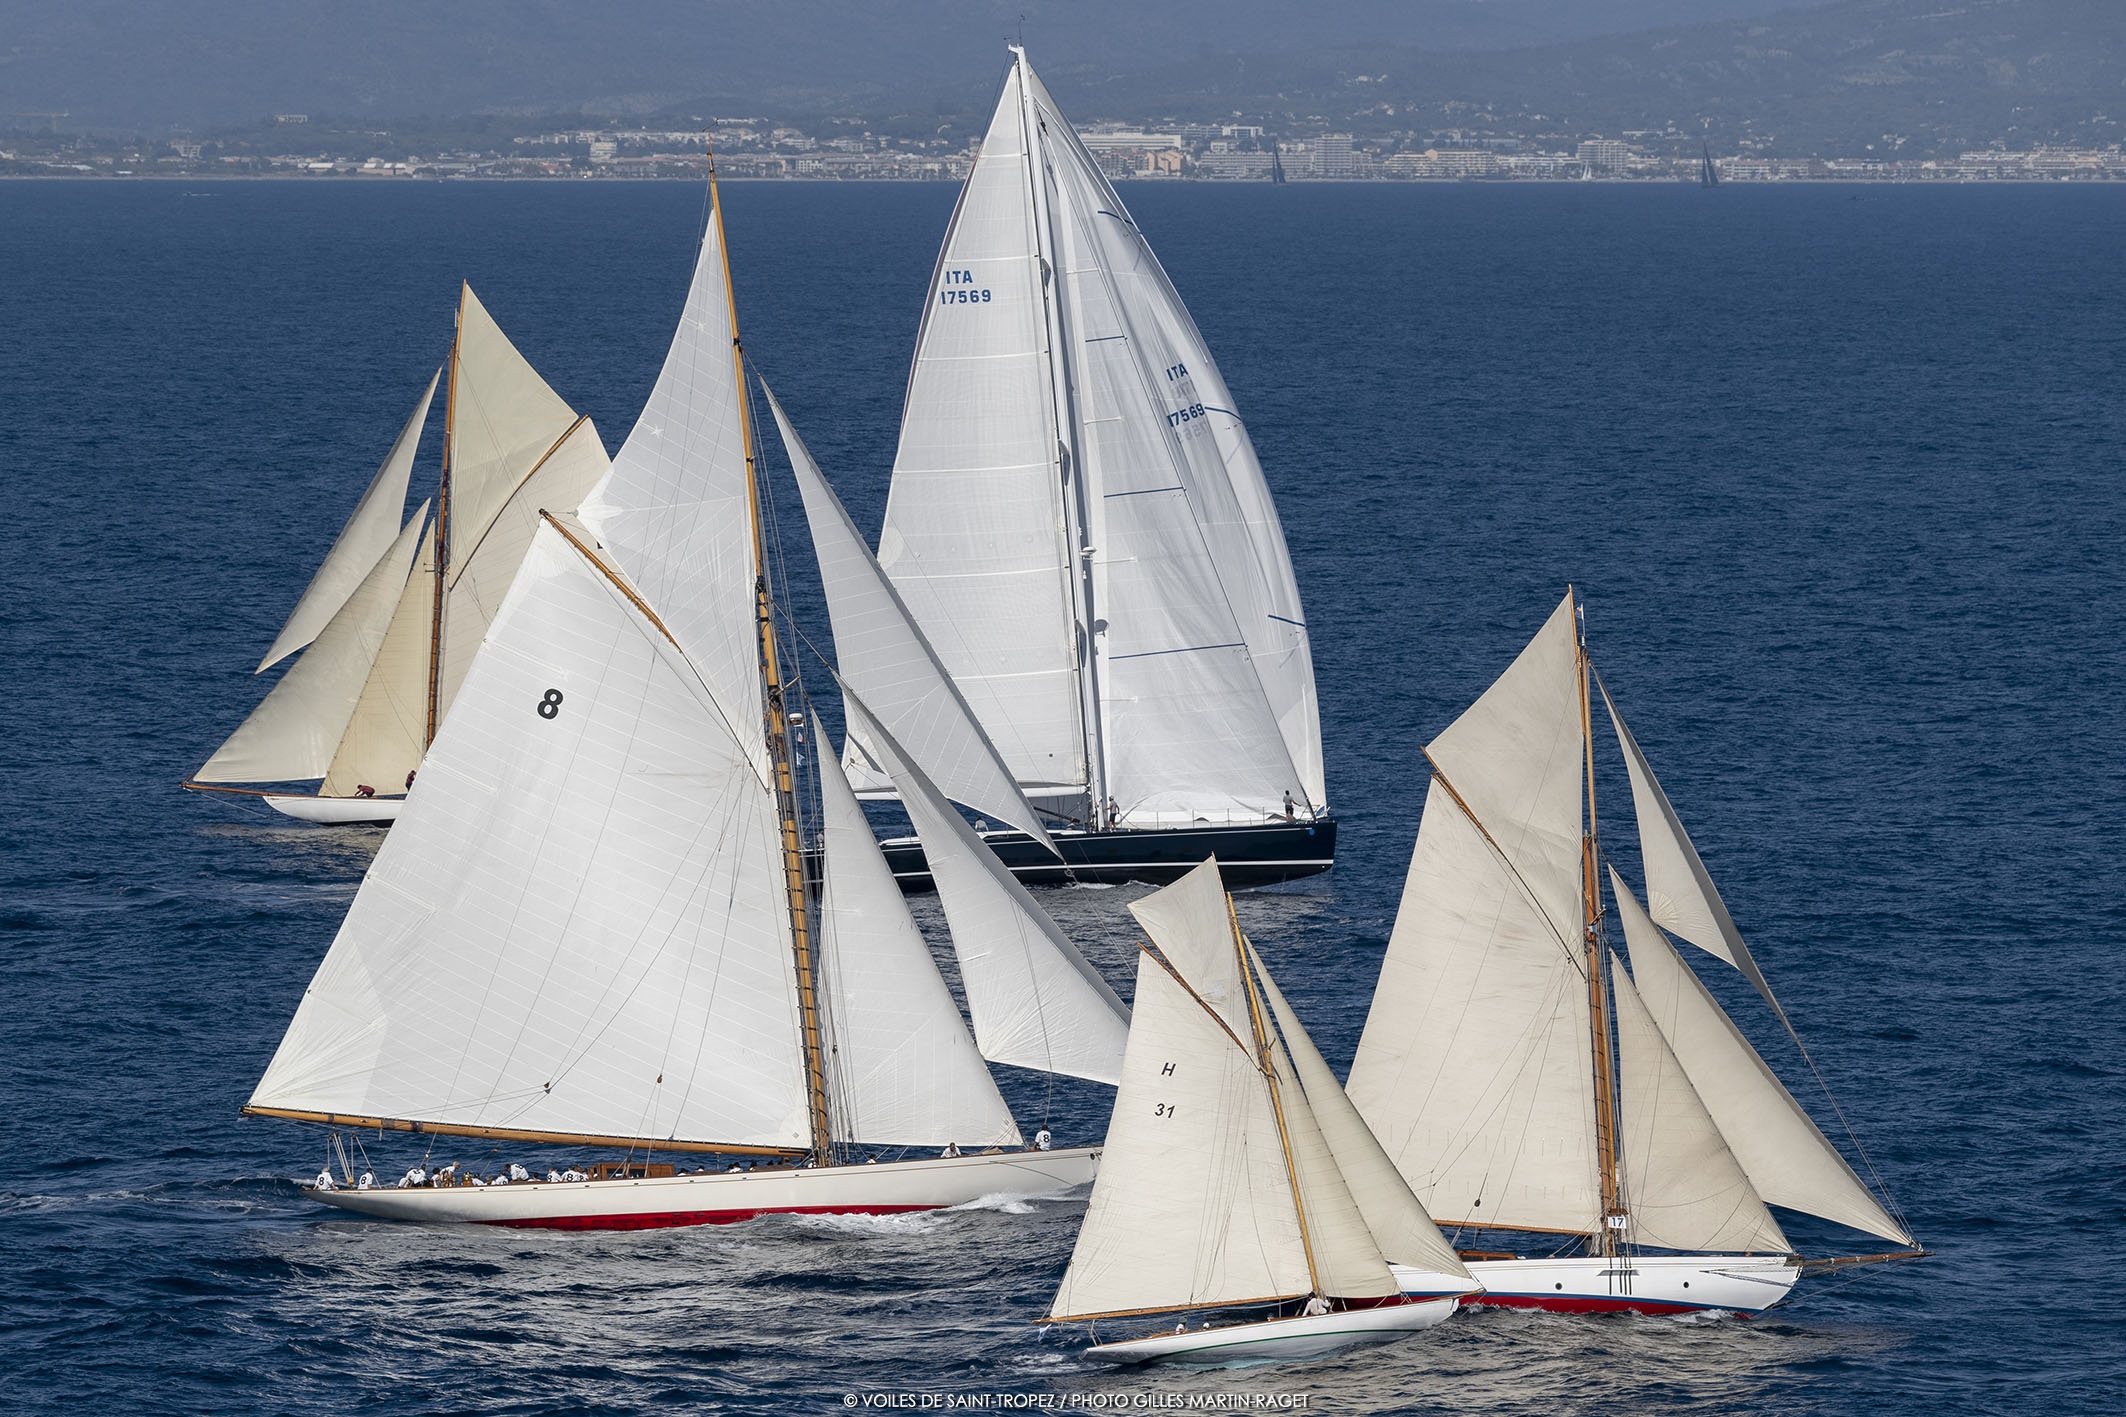  IRC, Classics  Les Voiles de StTropez  StTropez FRA  Day 4, Centennial Trophy with 22 classic yachts